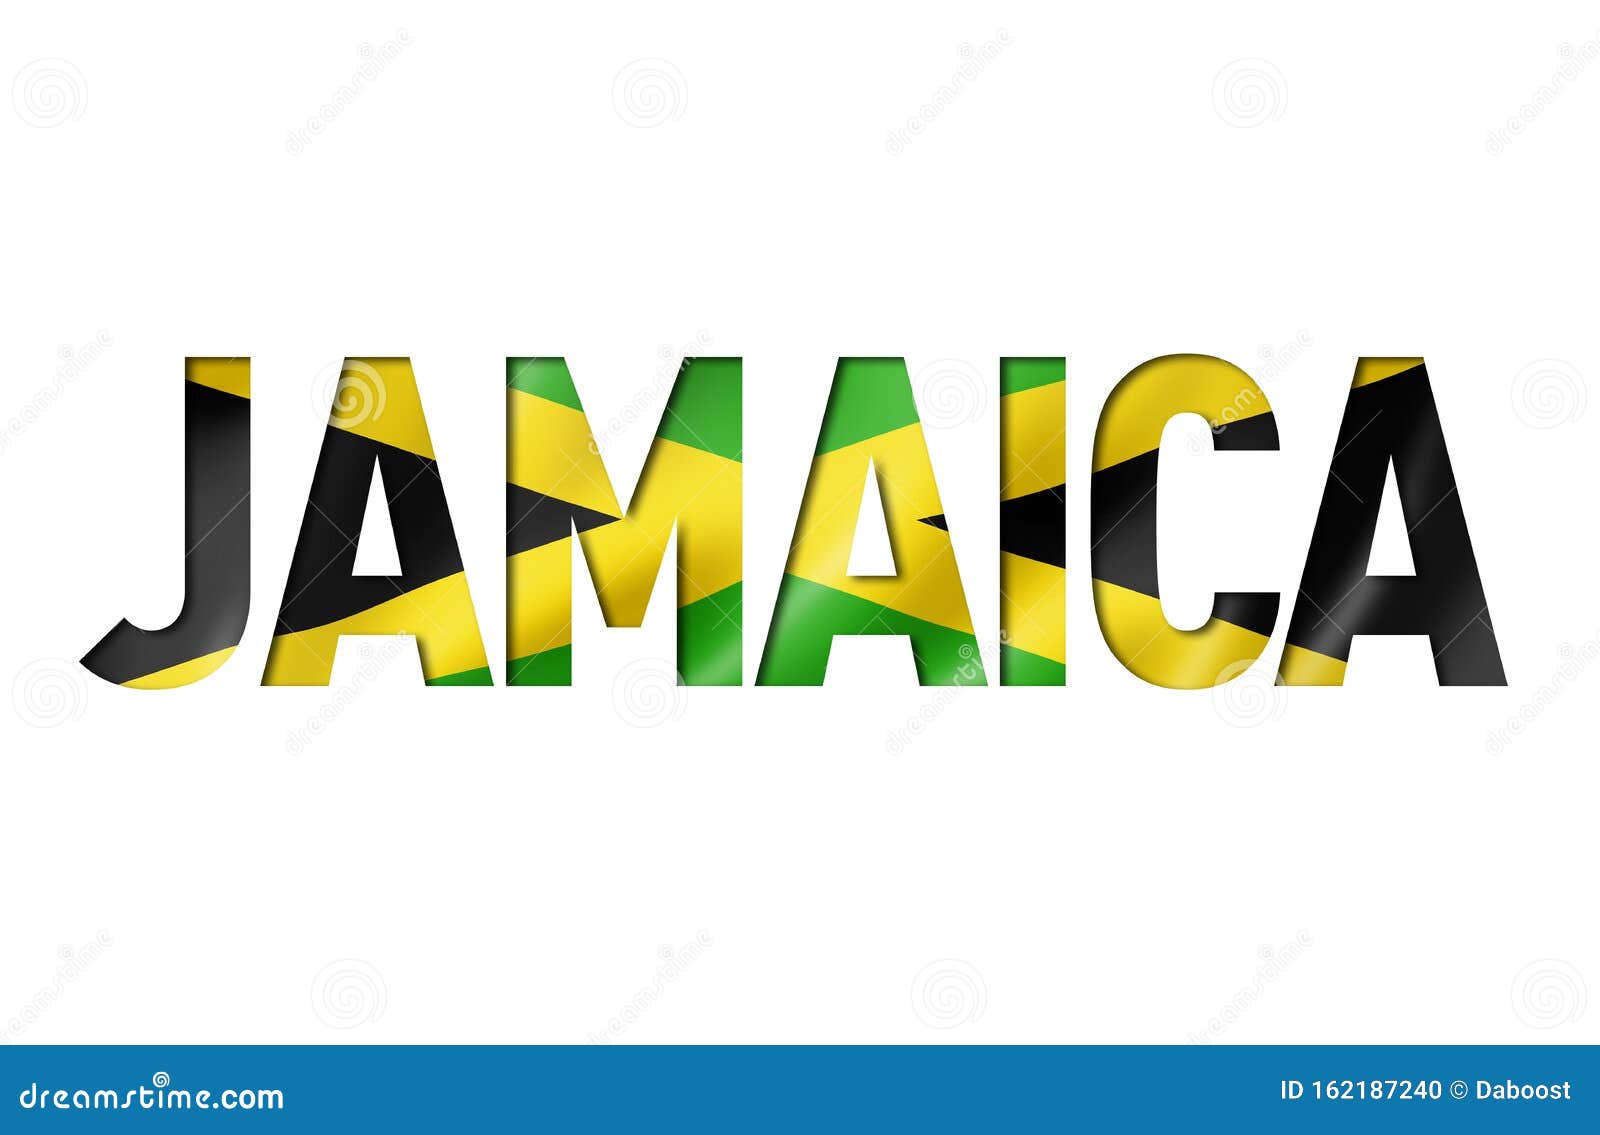 jamaican flag text font